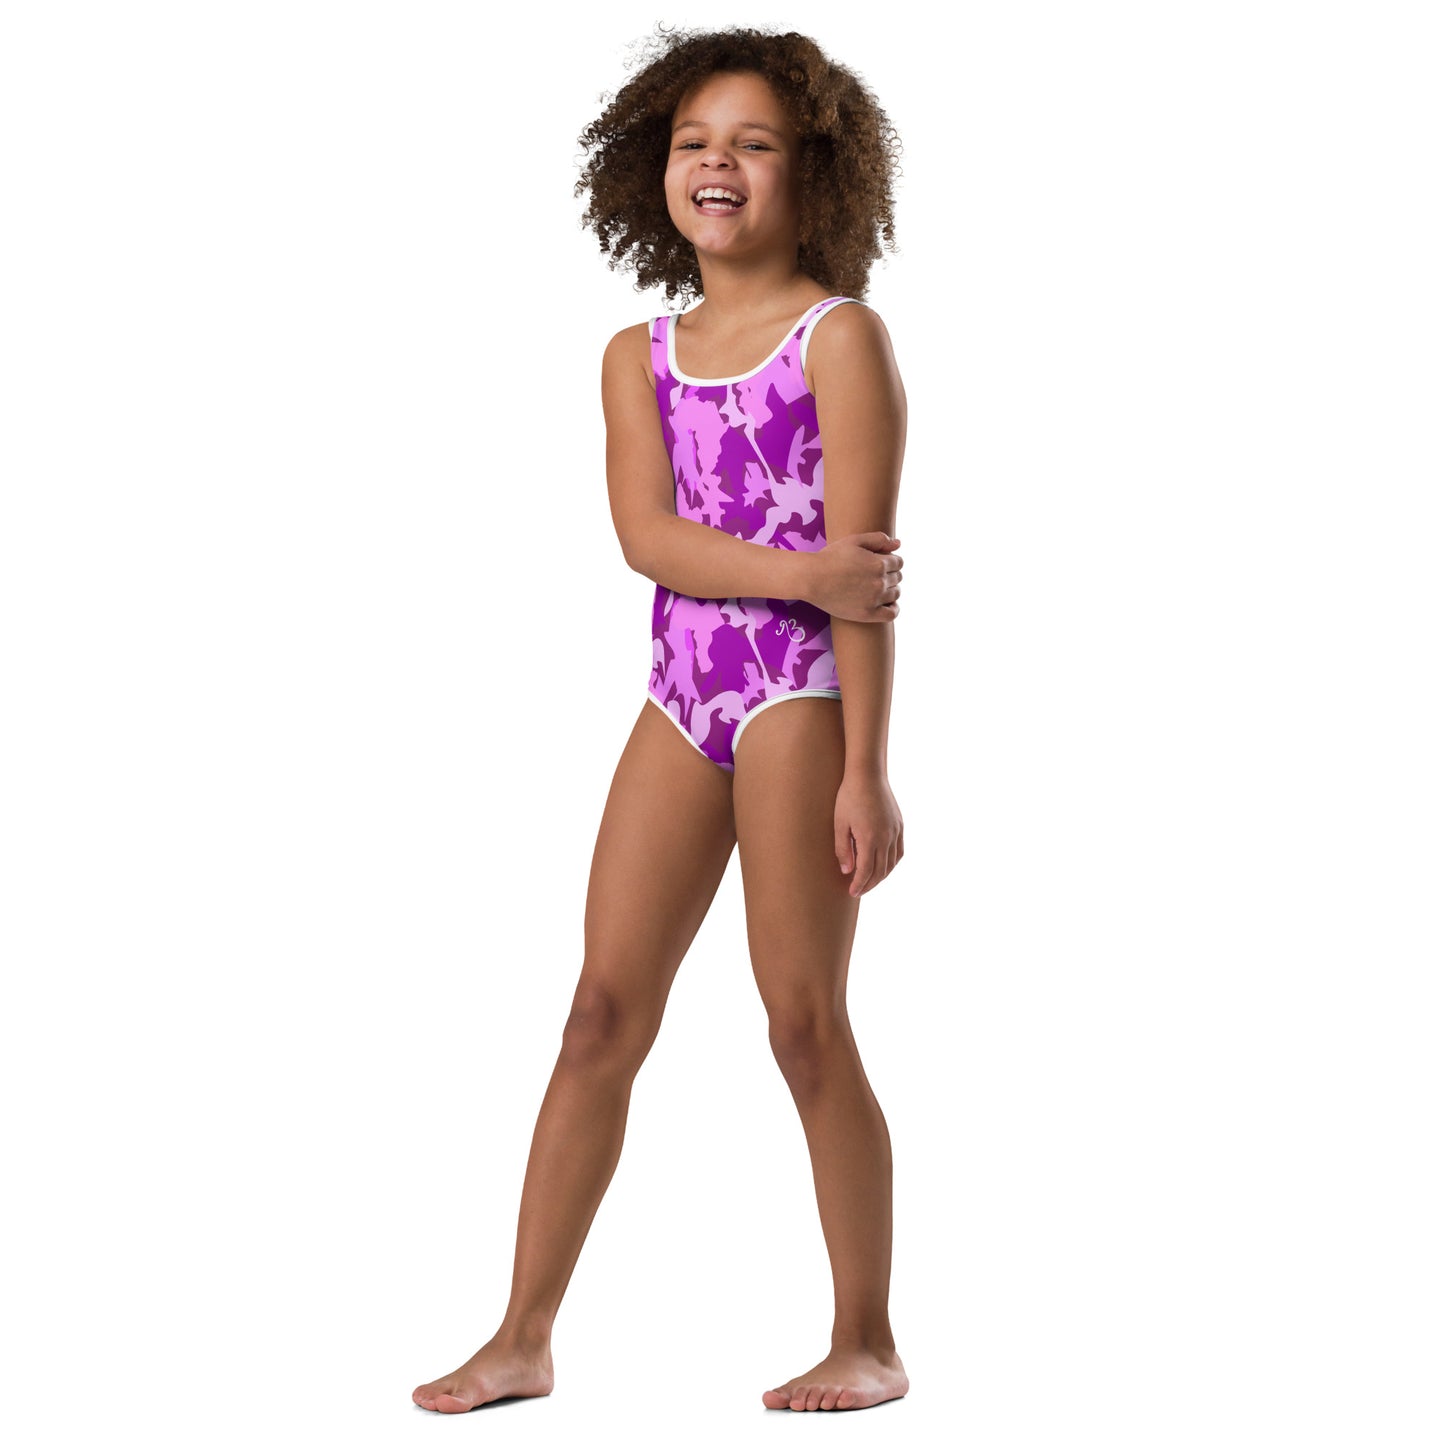 AFriBix Pink Camo Print Girls Kids Swimsuit